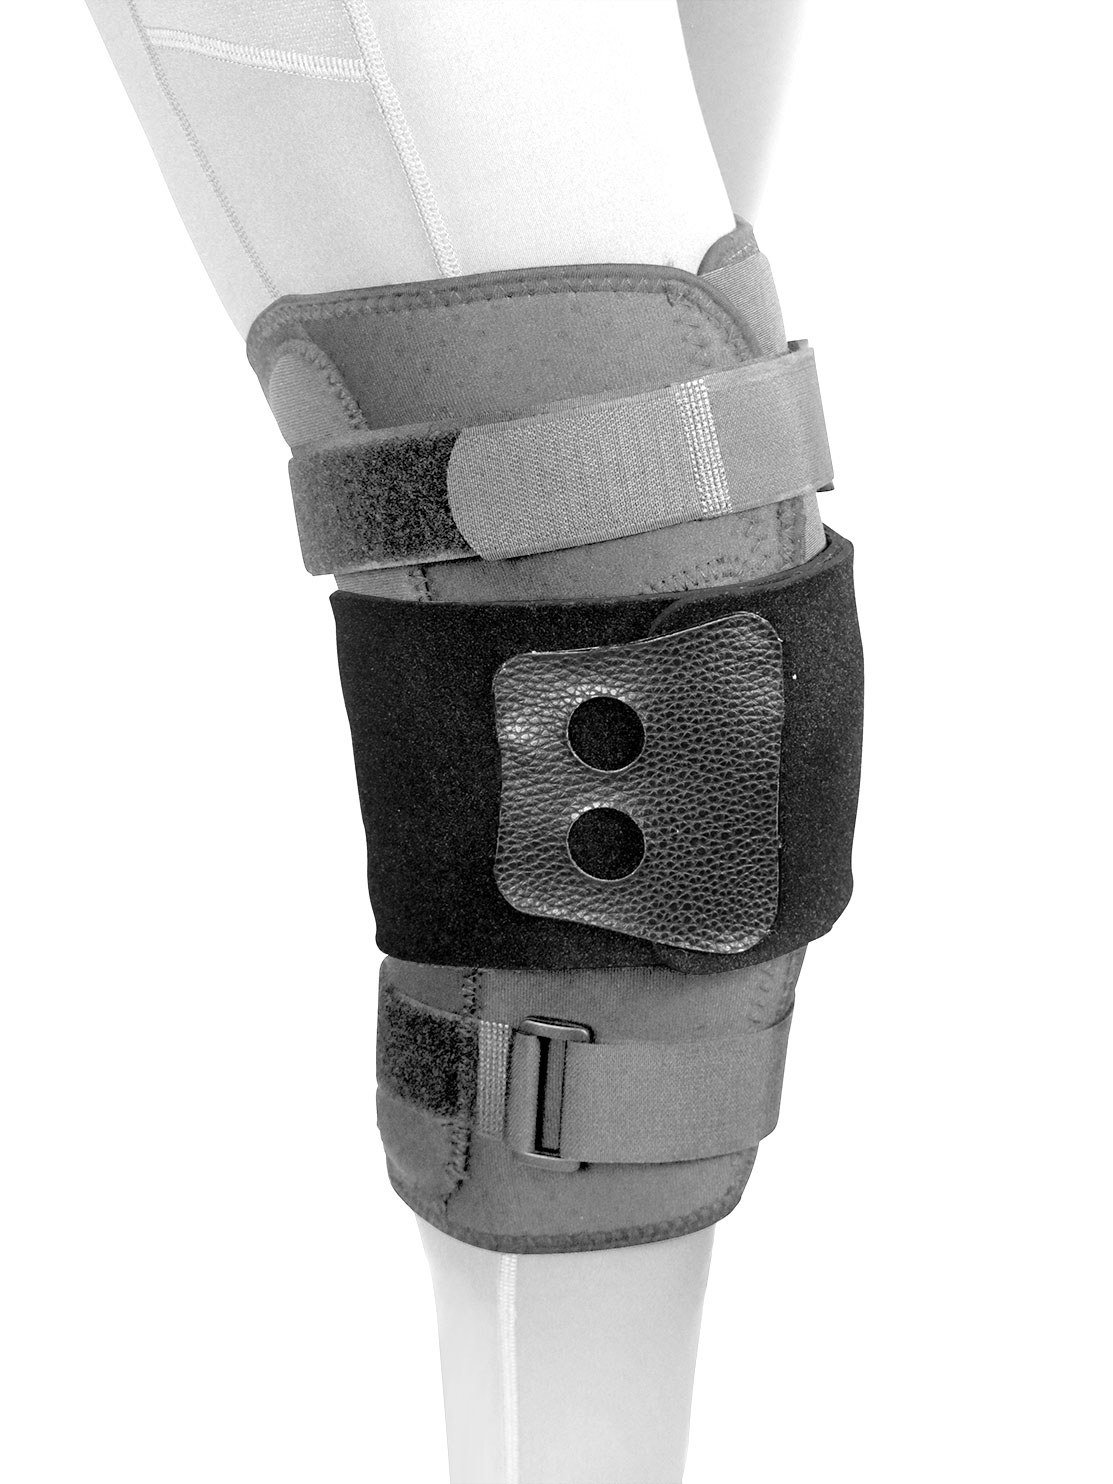 ISO Preferred - Knee Suspension Sleeve - Preferred Med Supply